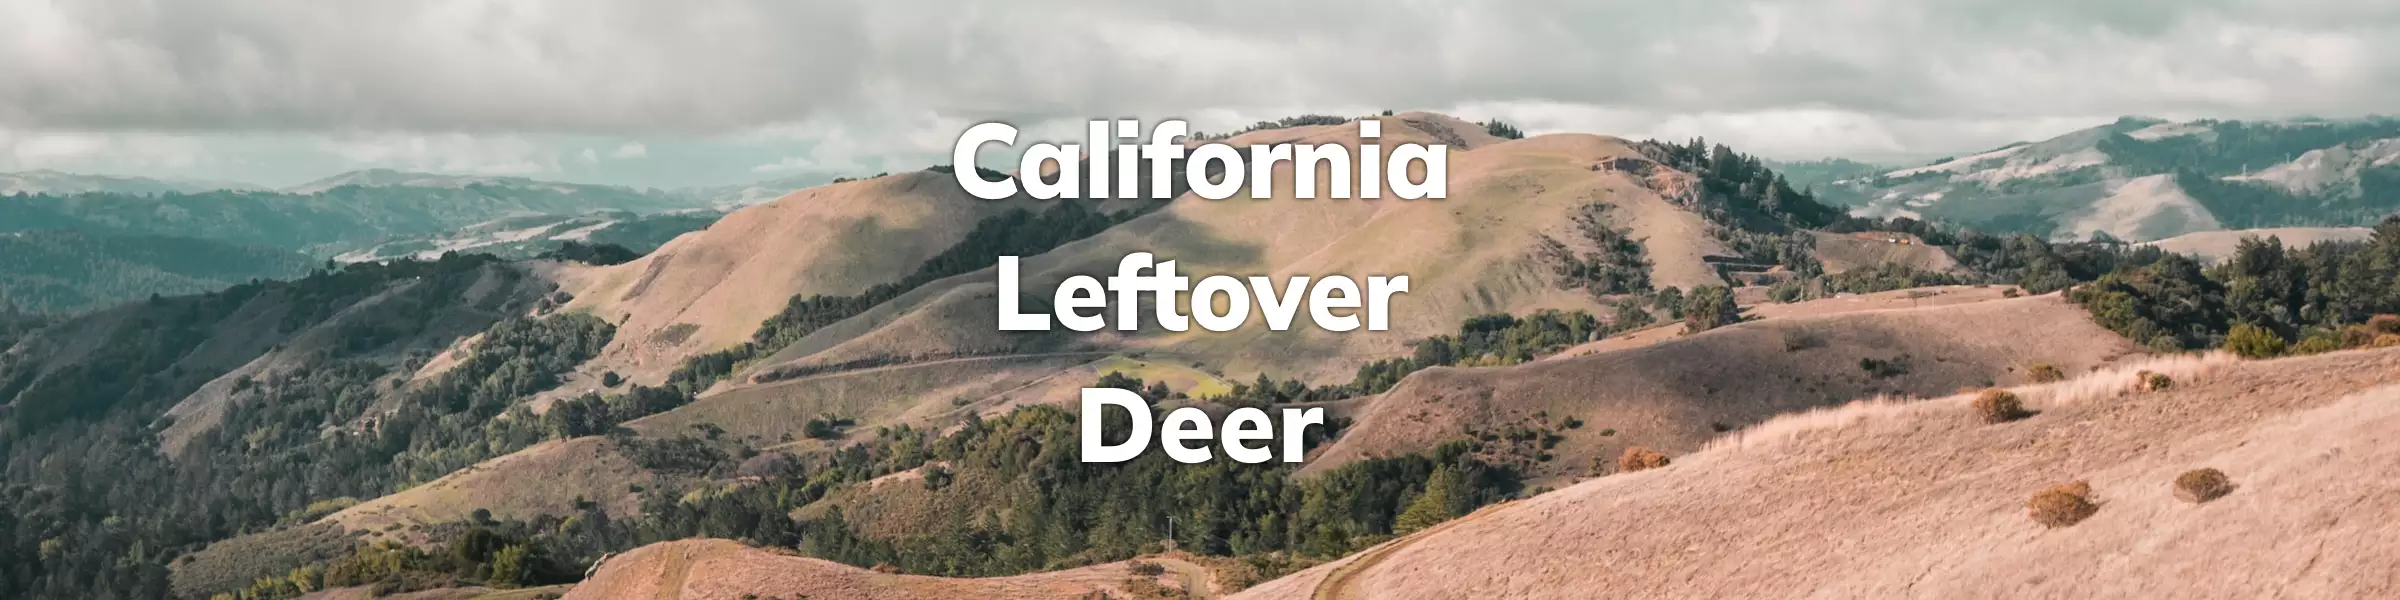 California Leftover Deer